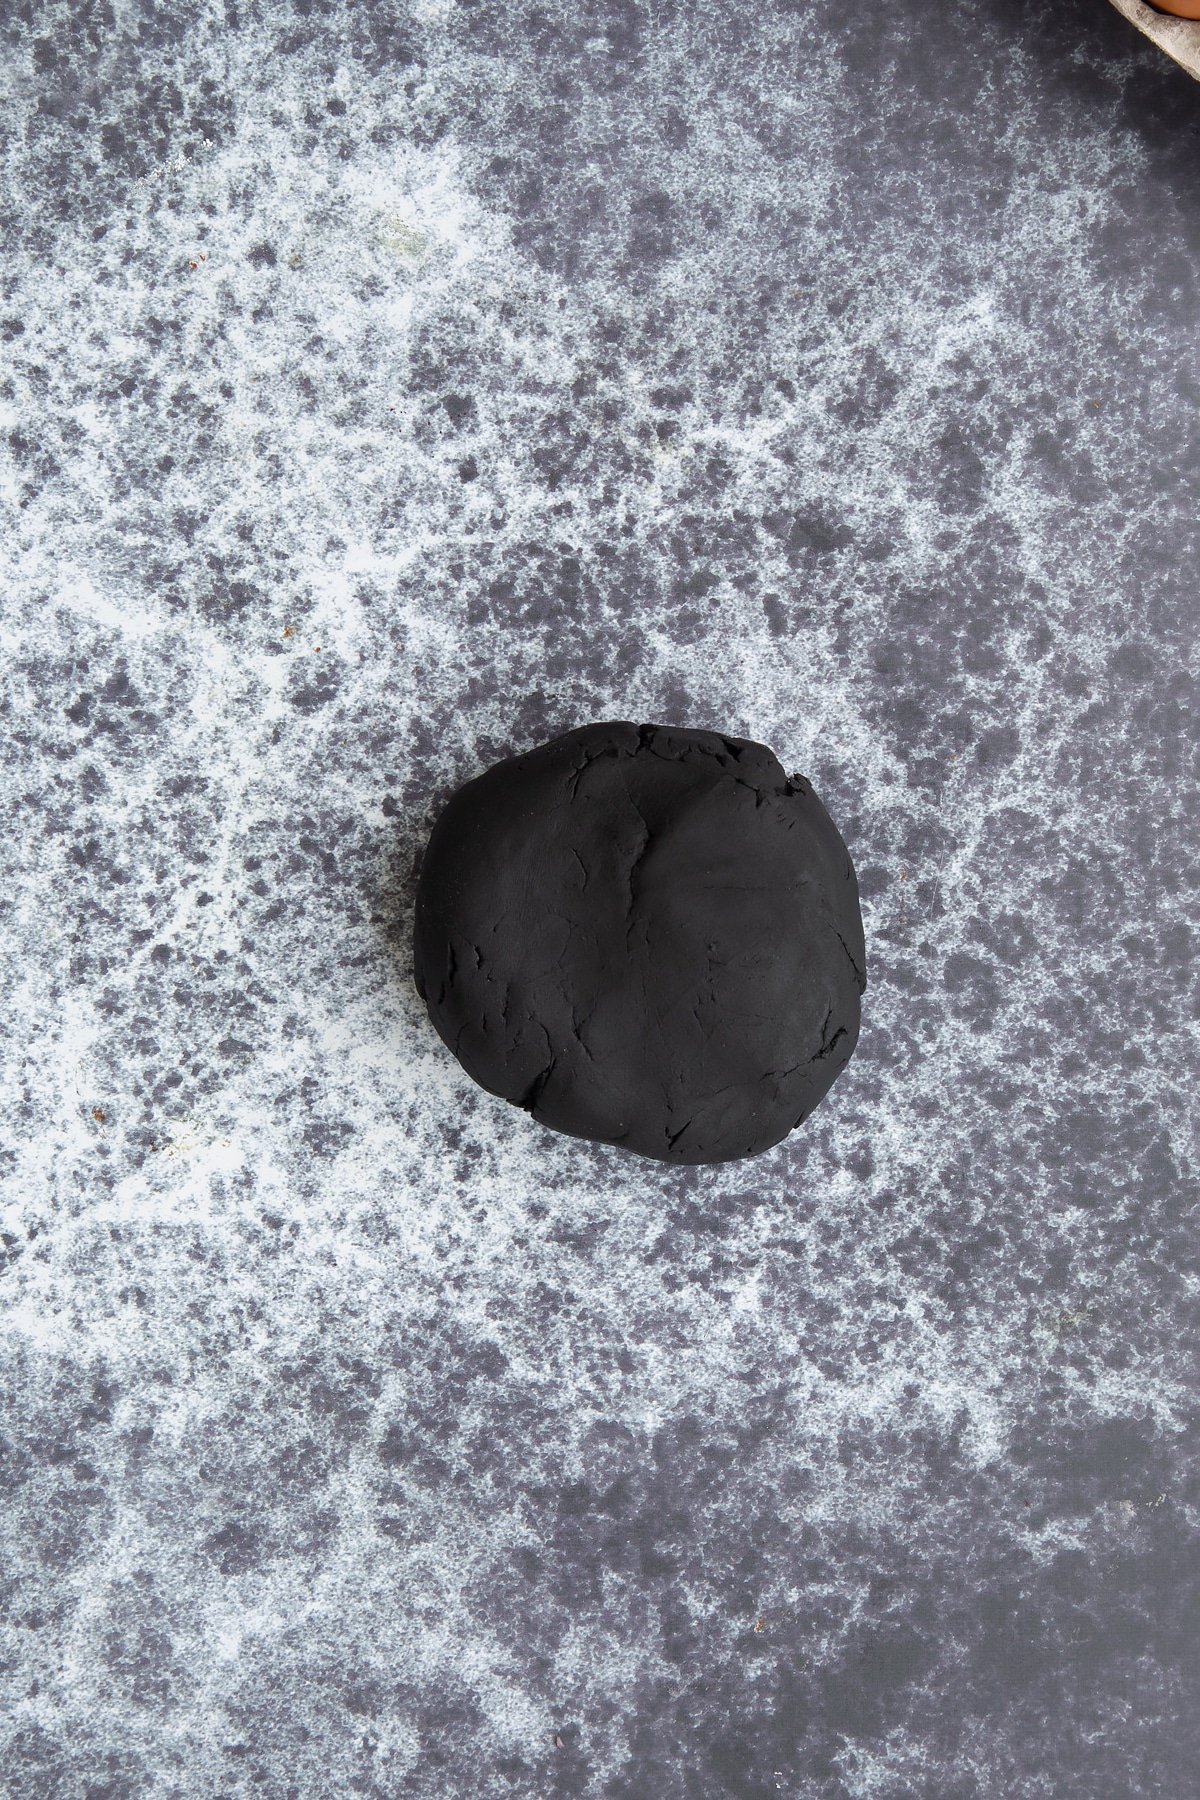 A ball of black sugar paste on a dark background.